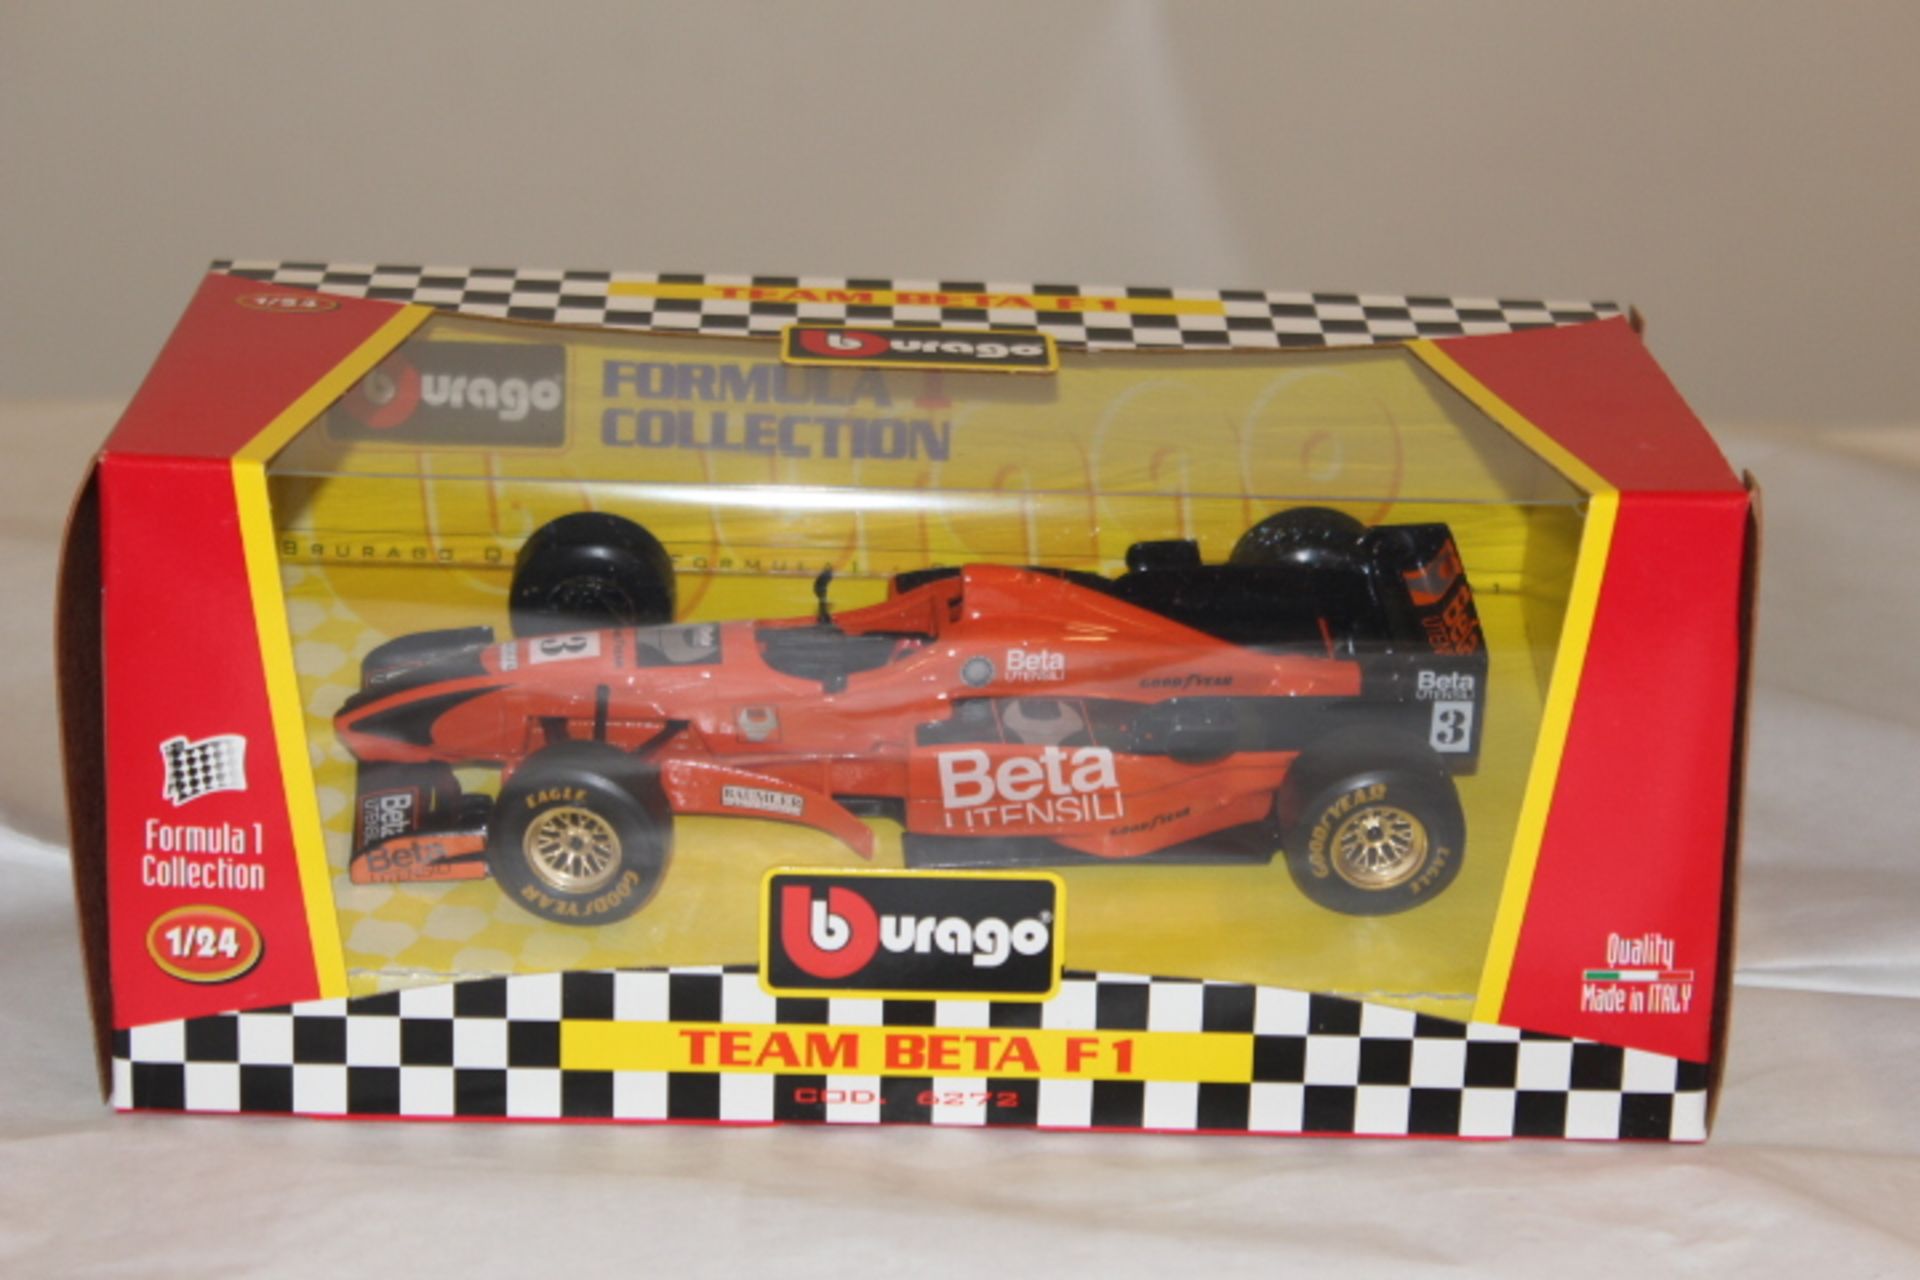 Burago Team Beta F1 collectable model car - Image 2 of 2